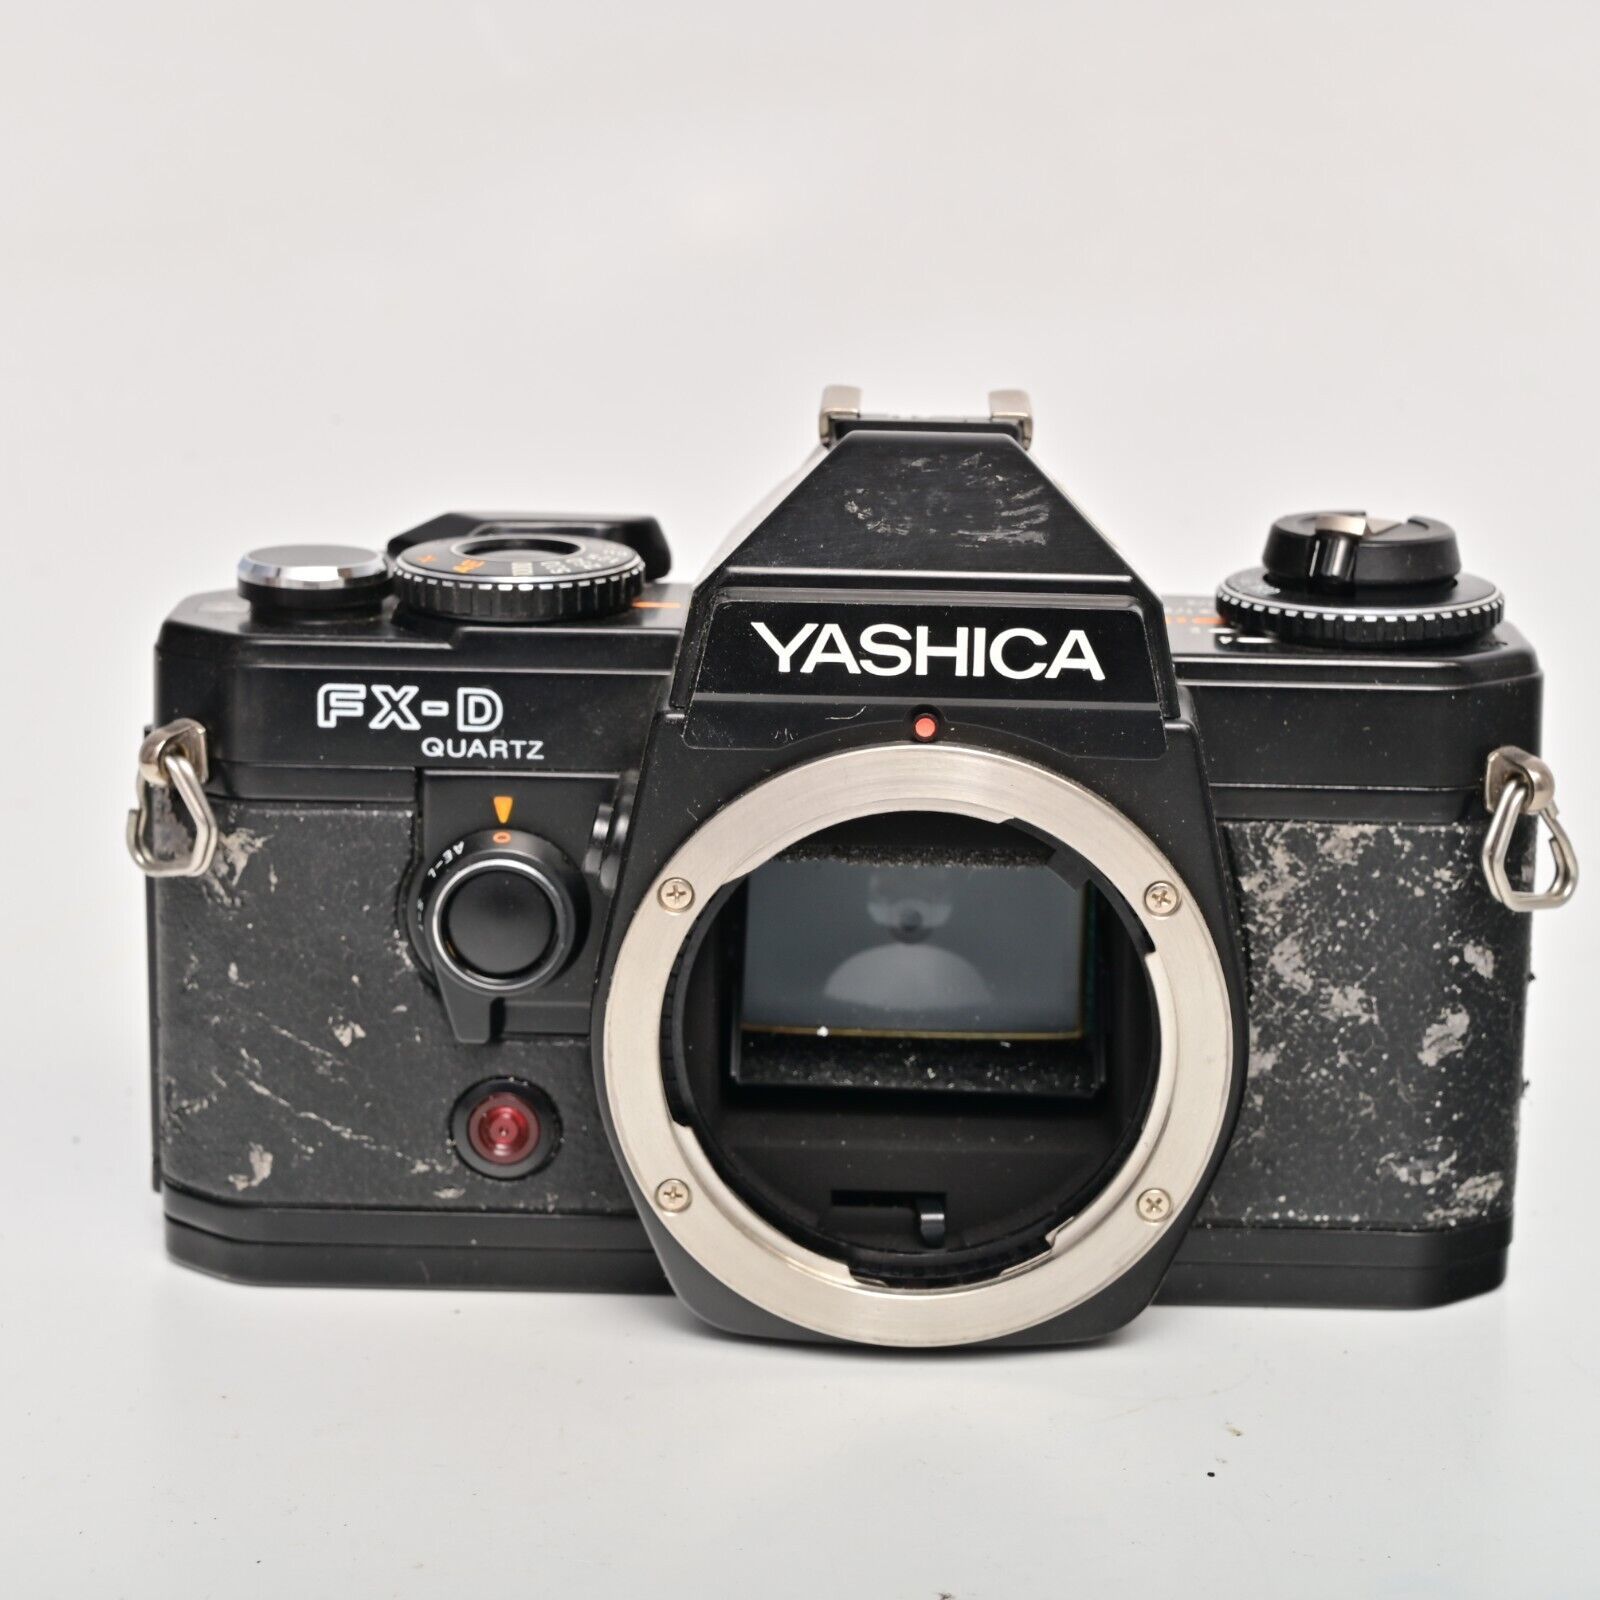 Yashica FX-D Quartz 35mm SLR Film Camera Body Working - $28.04